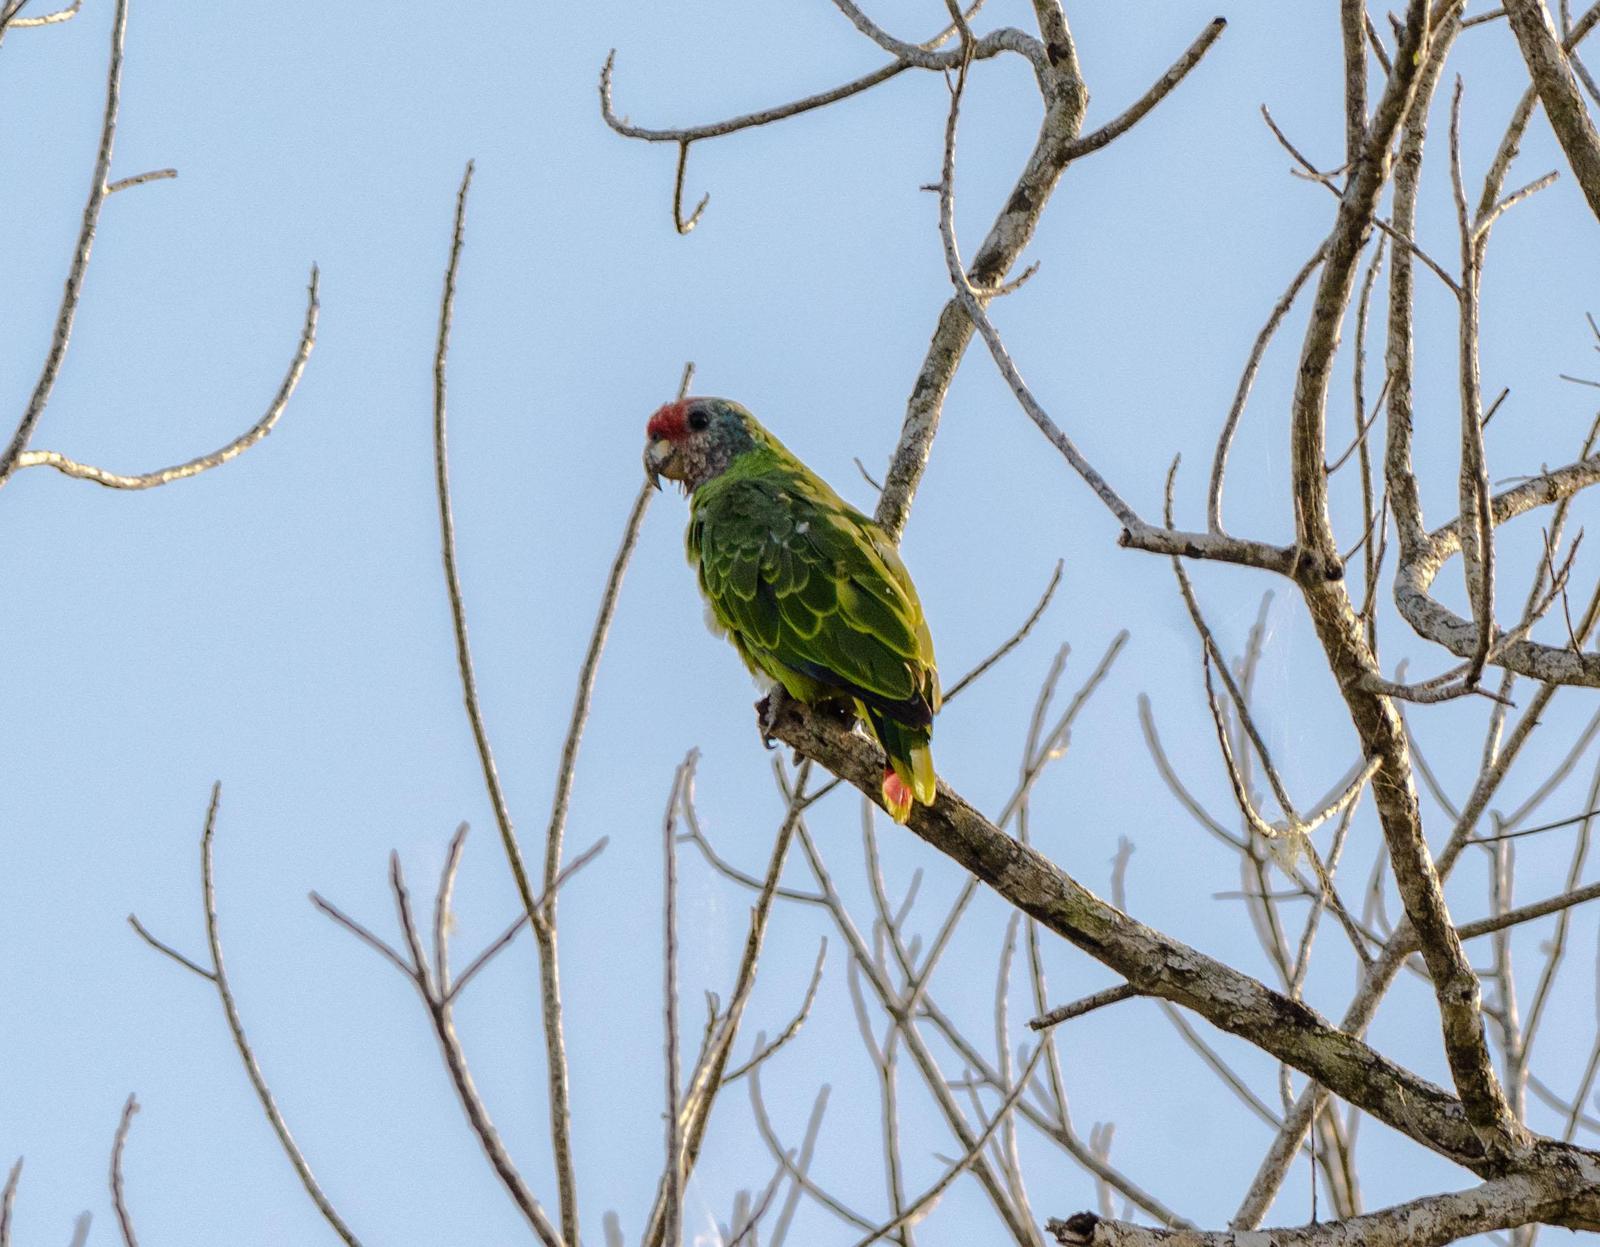 Red-tailed Parrot Photo by Evaldo Cesari de Oliveira Jr